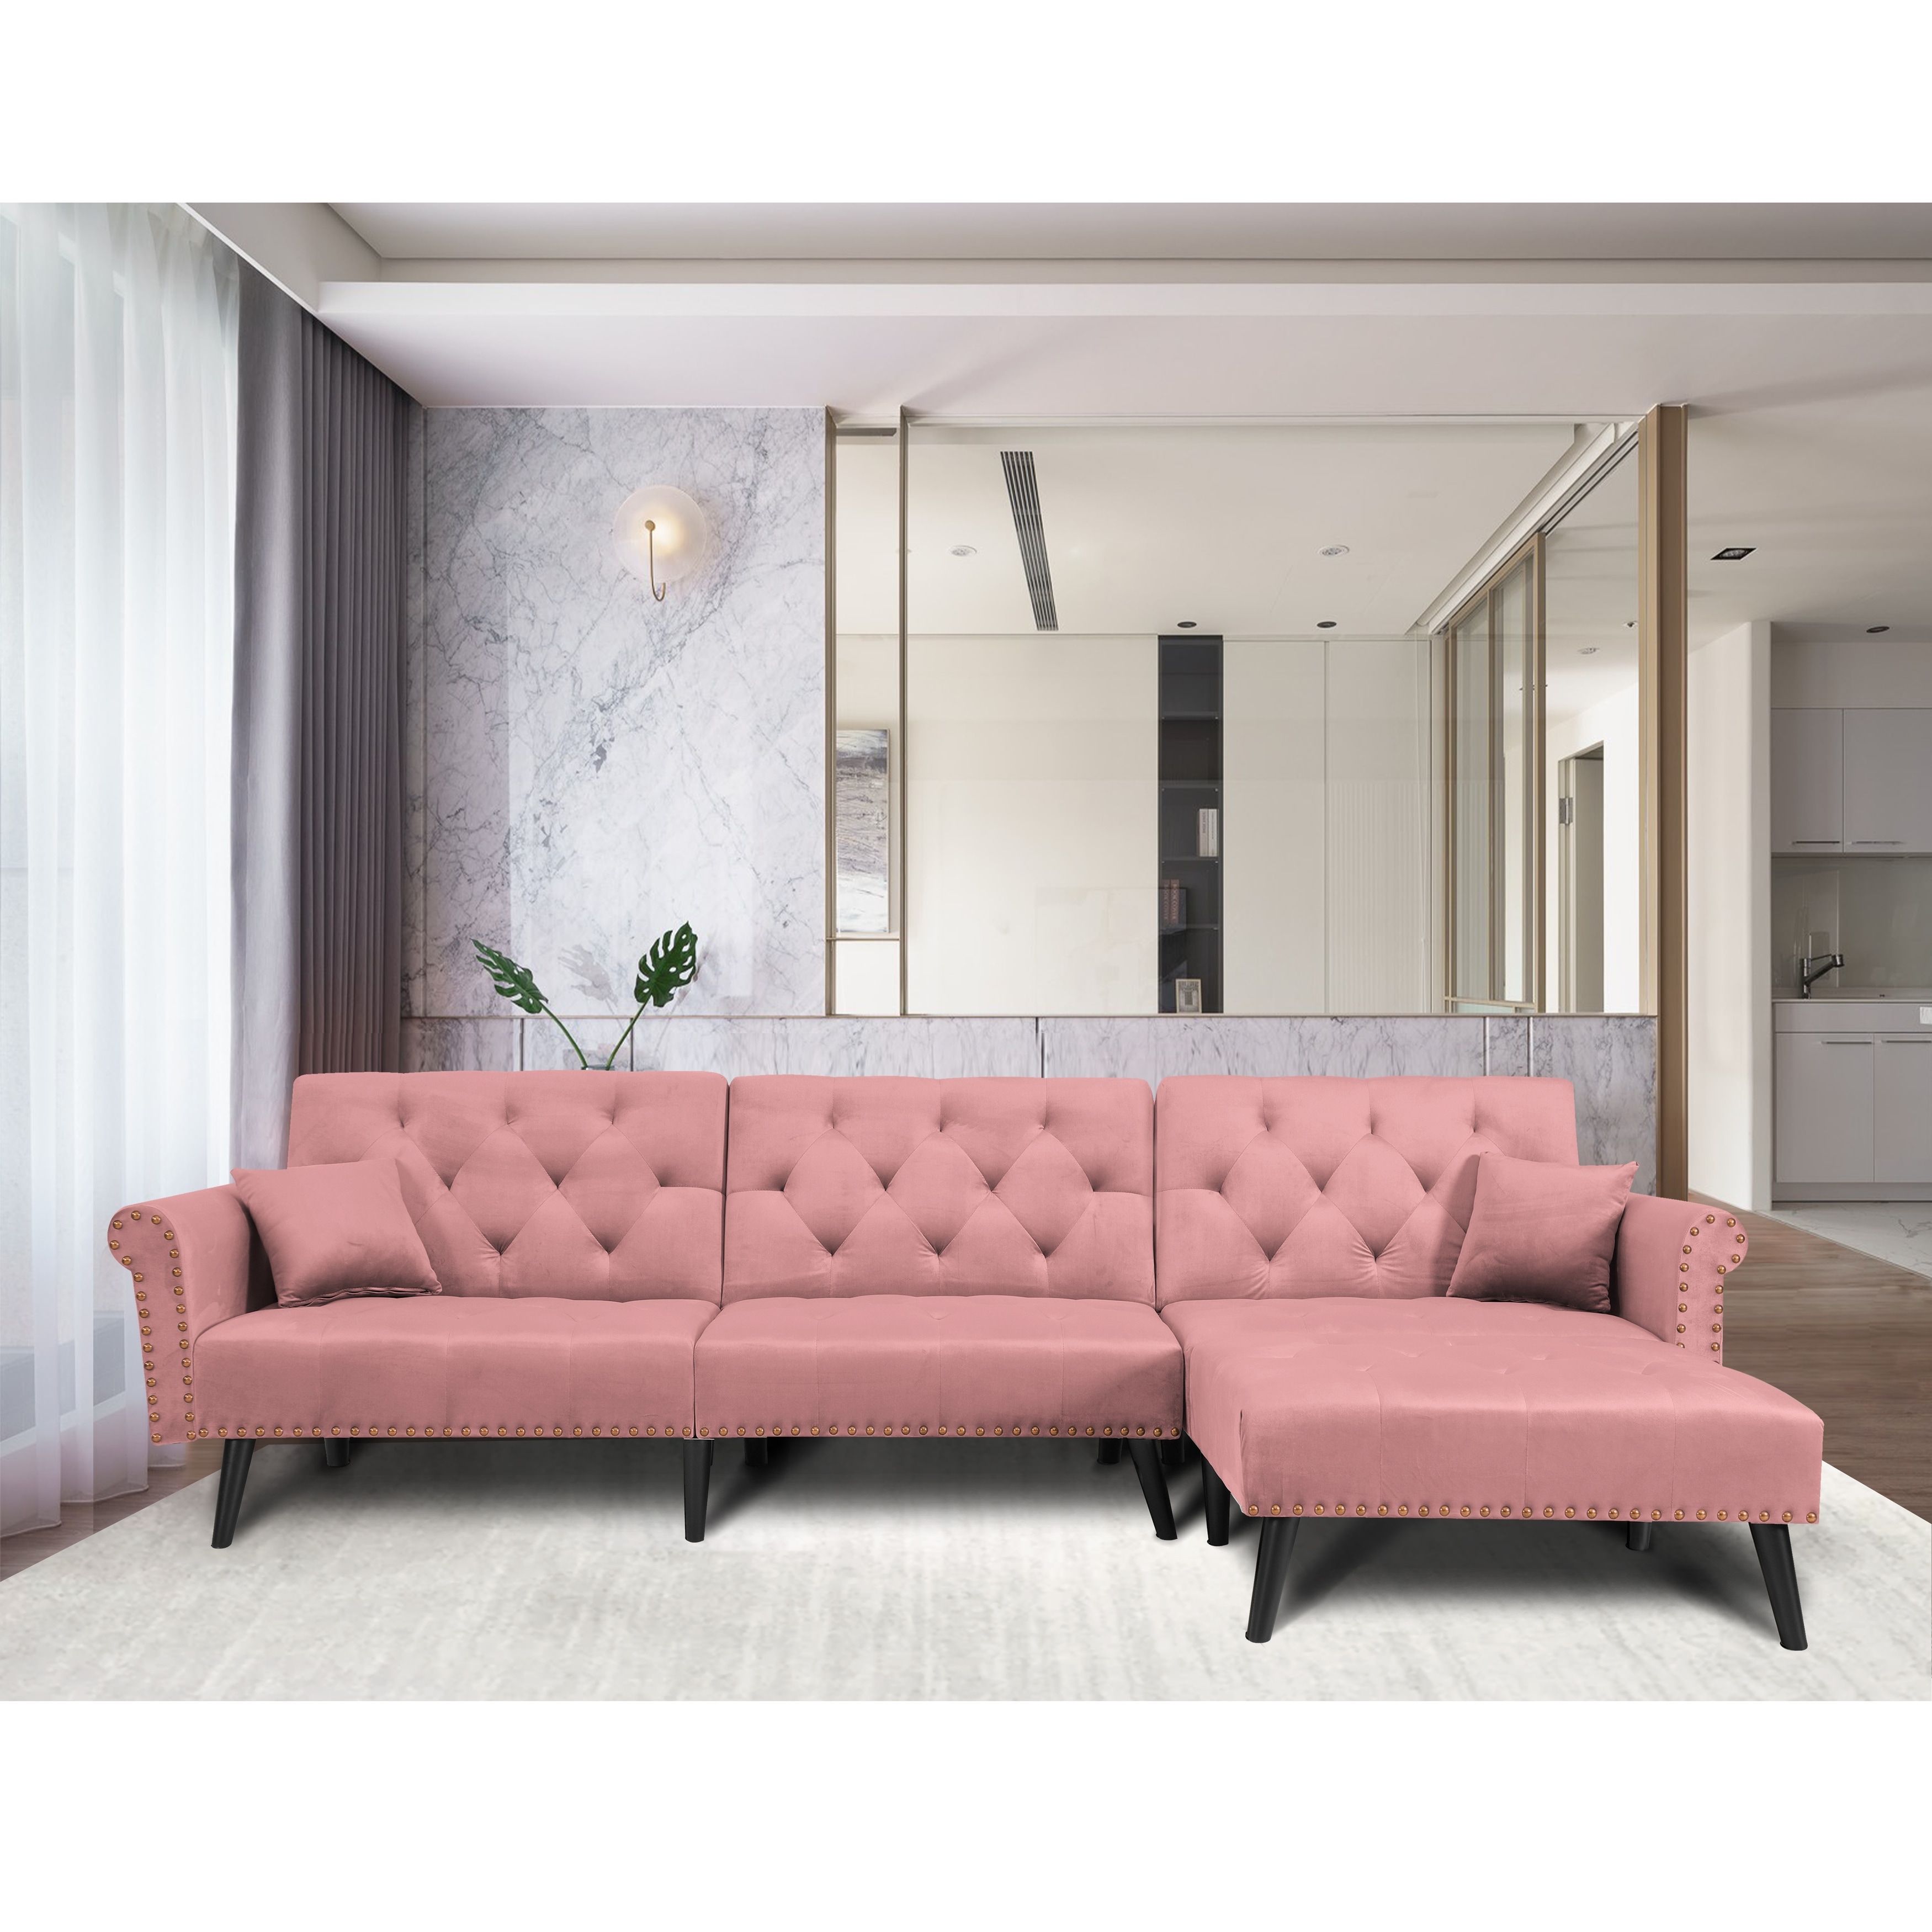 TiramisuBest Reversible Velvet Sectional Sofa Sleeper Decor with Metal Nails, Pink